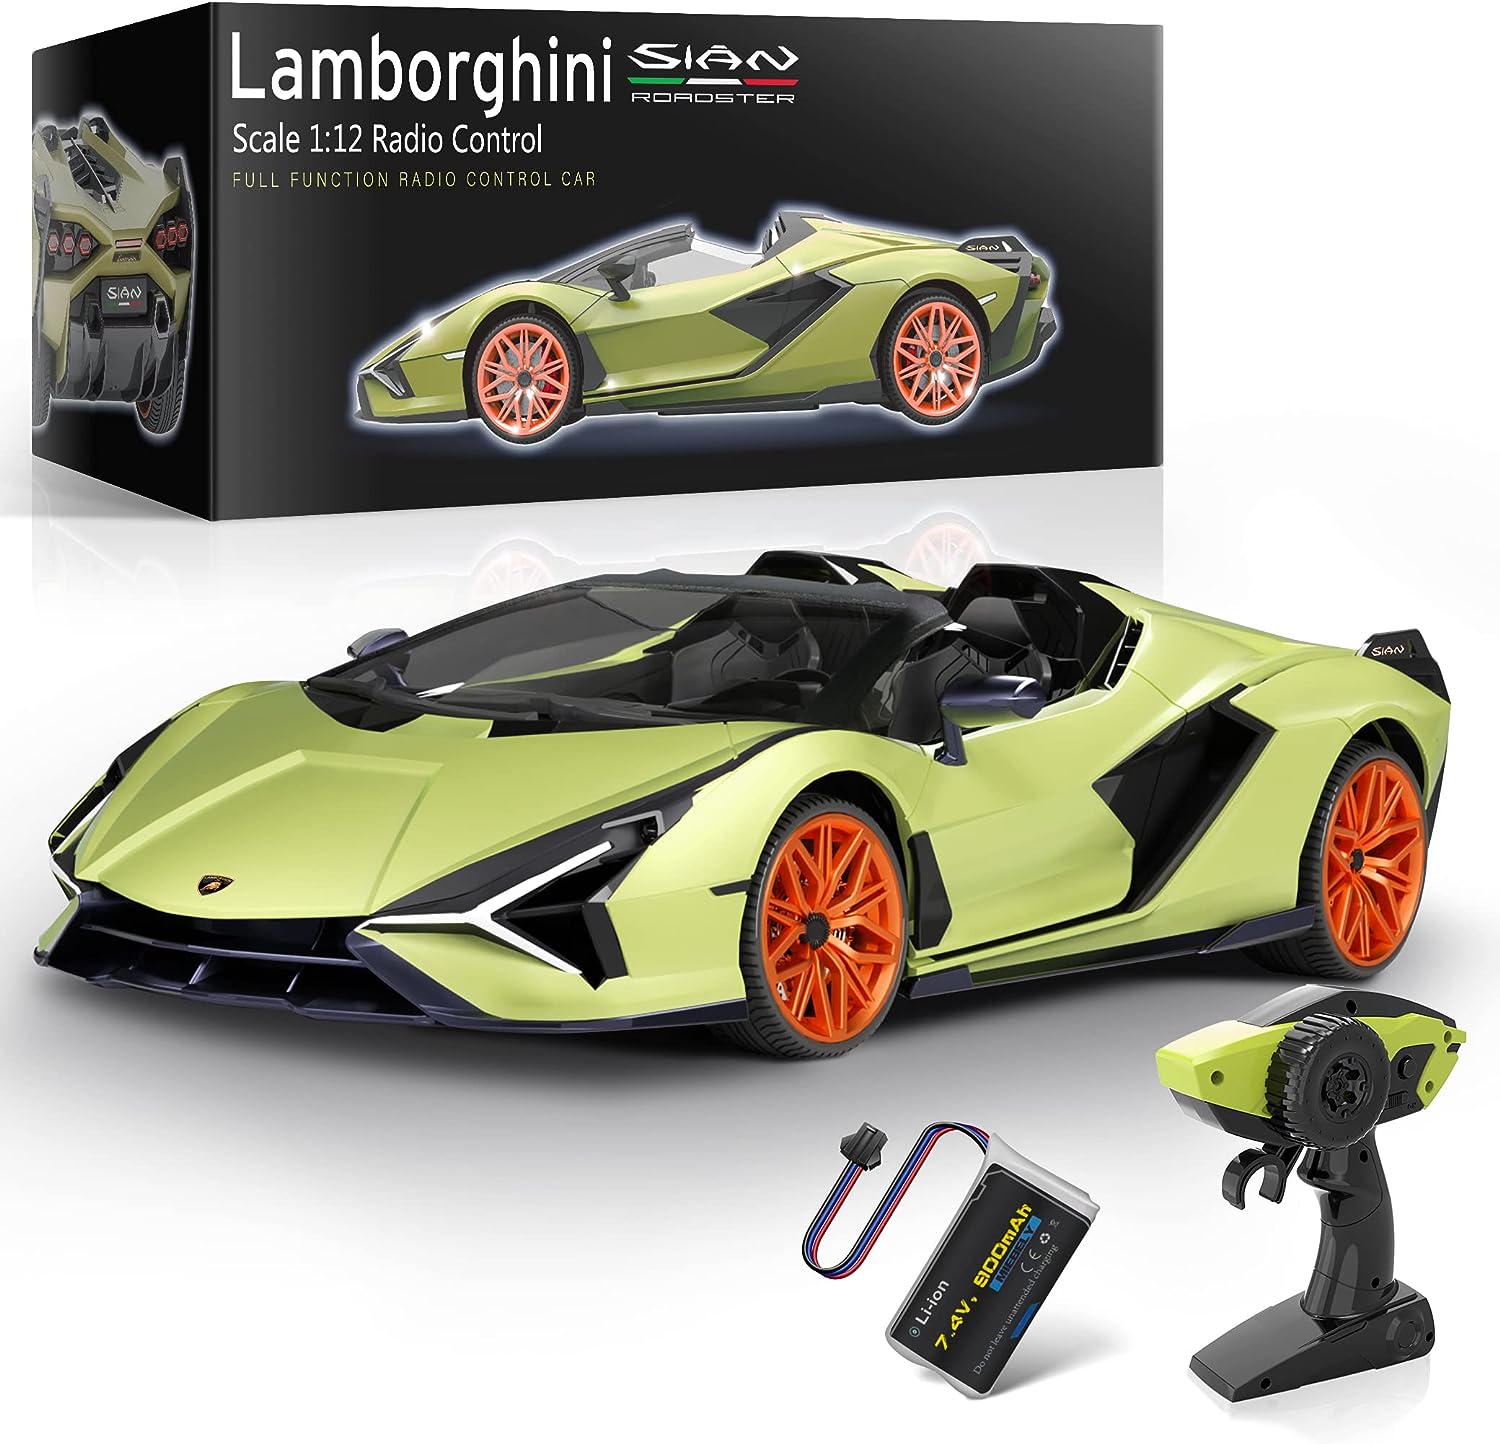 Lamborghini Sian Roadster Full Specs, Features and Price